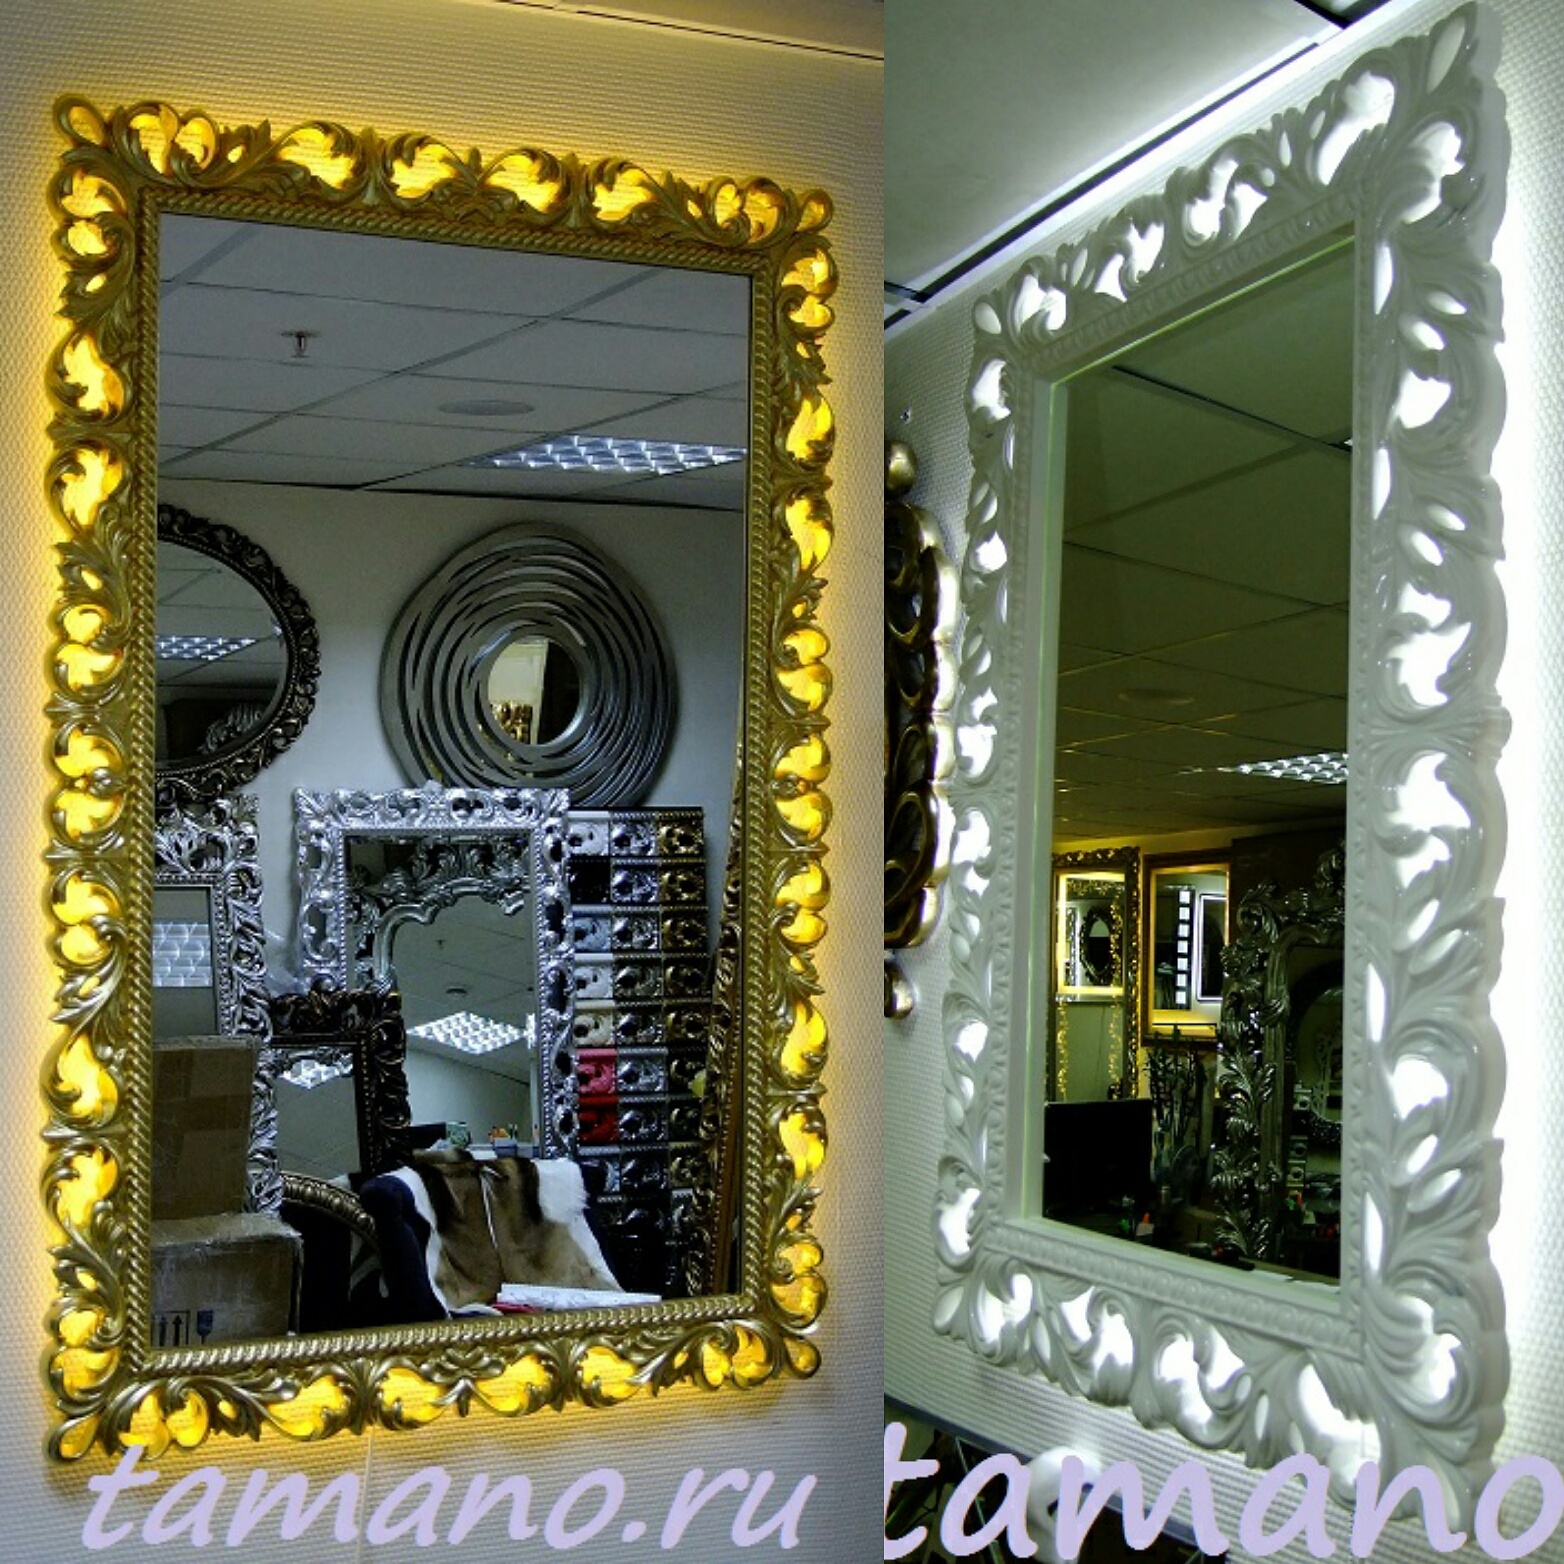 Установить внутреннюю светодиодную подсветку на зеркало в раме можно в Тамано.ру.jpg